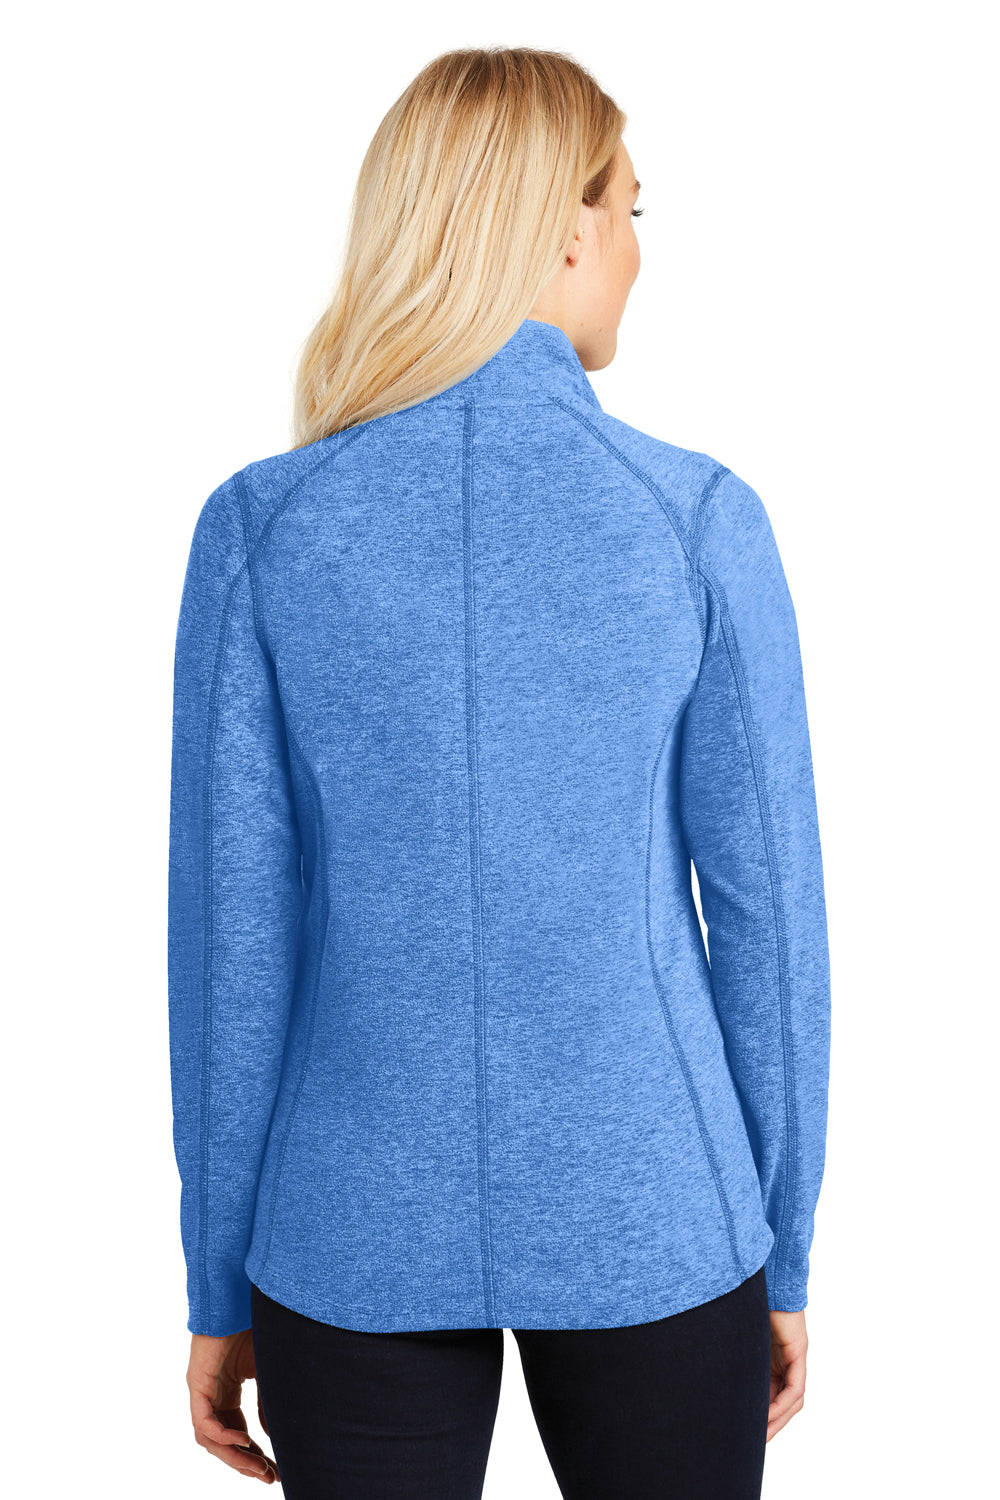 Port Authority L235 Womens Heather Microfleece Full Zip Sweatshirt Royal Blue Back